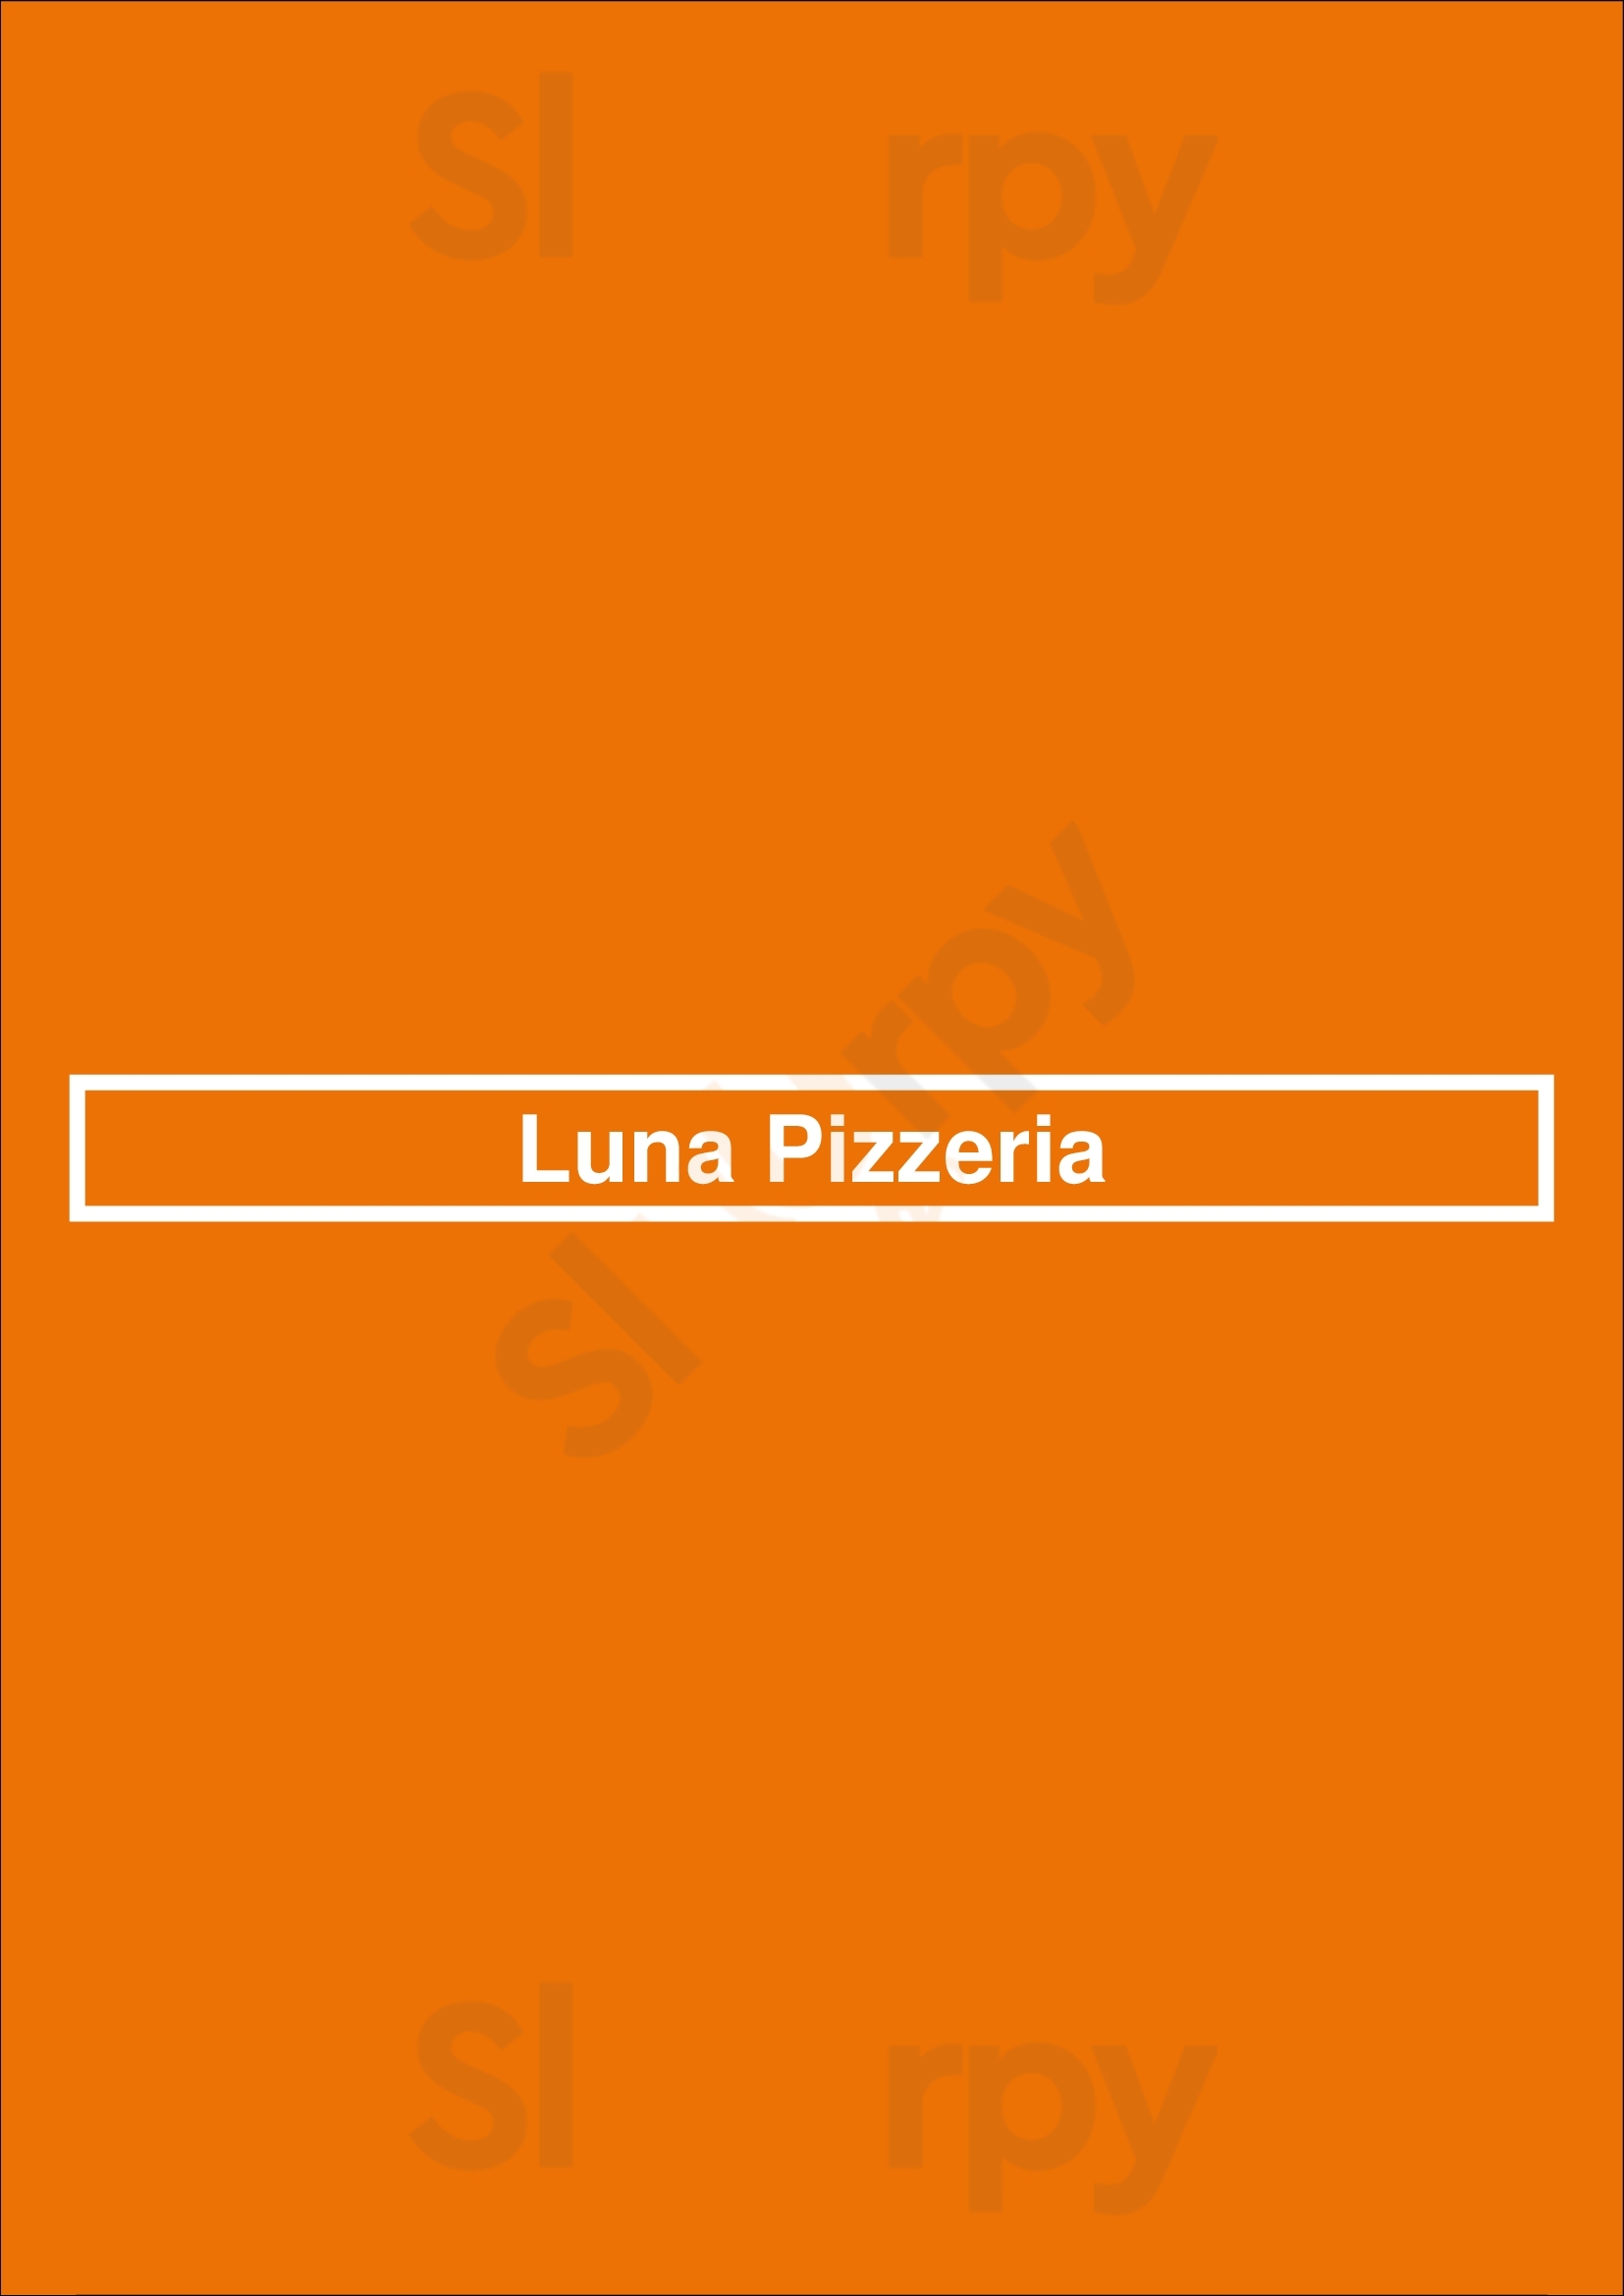 Luna Pizzeria Houston Menu - 1